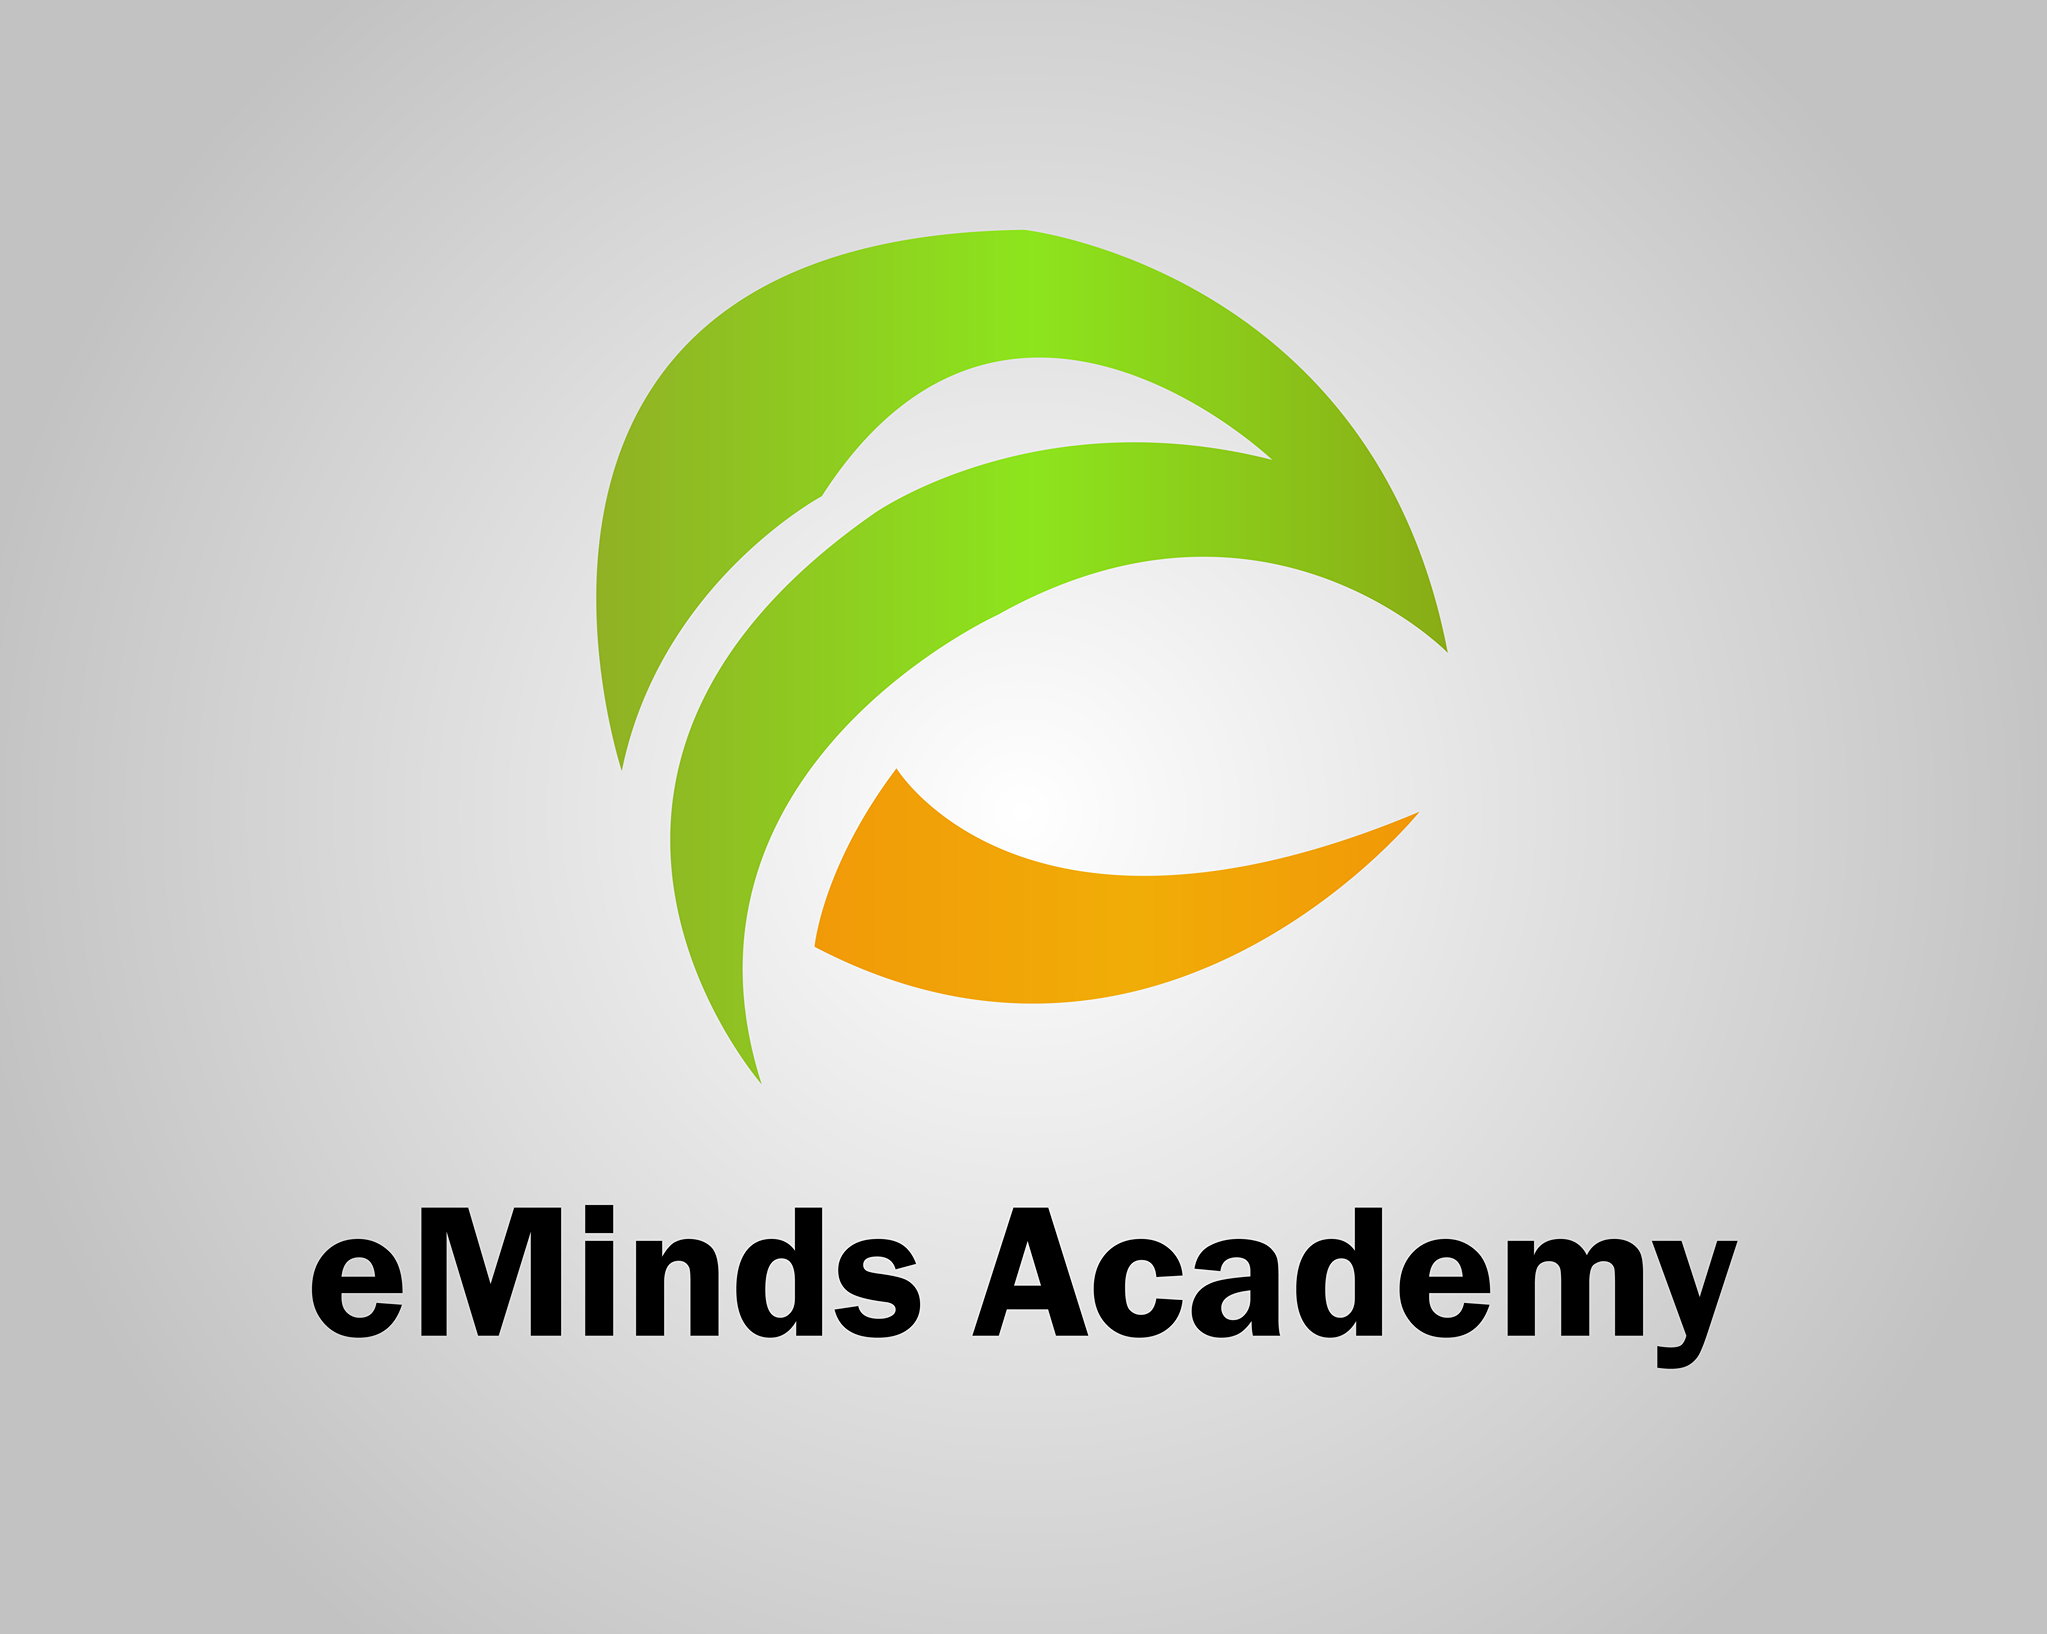 eMinds Academy